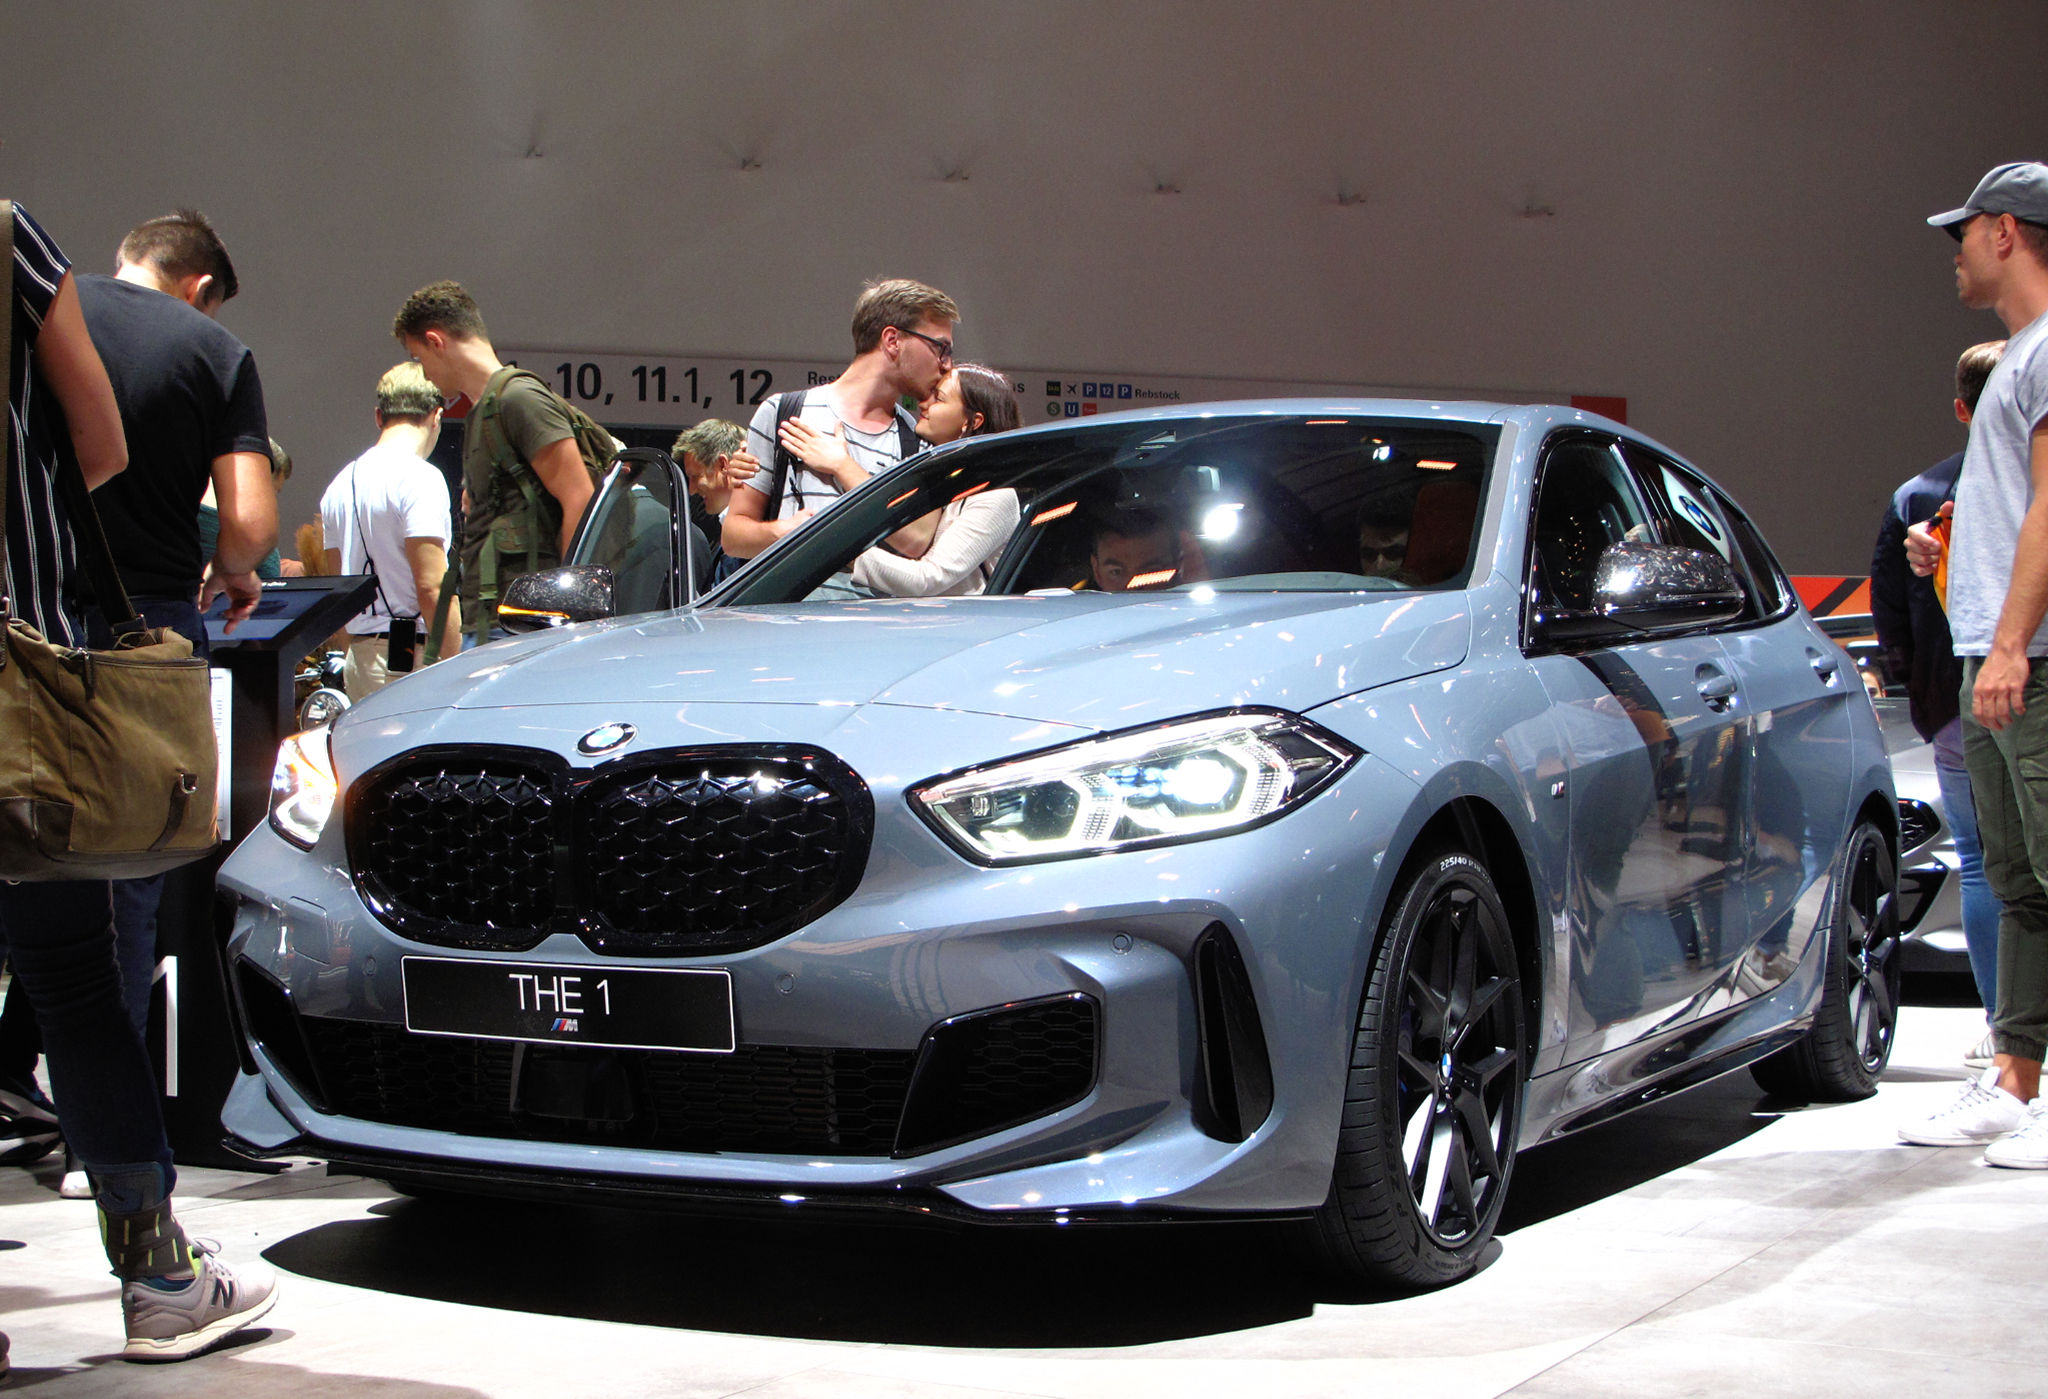 File:BMW F40 IMG 0431.jpg - Wikipedia